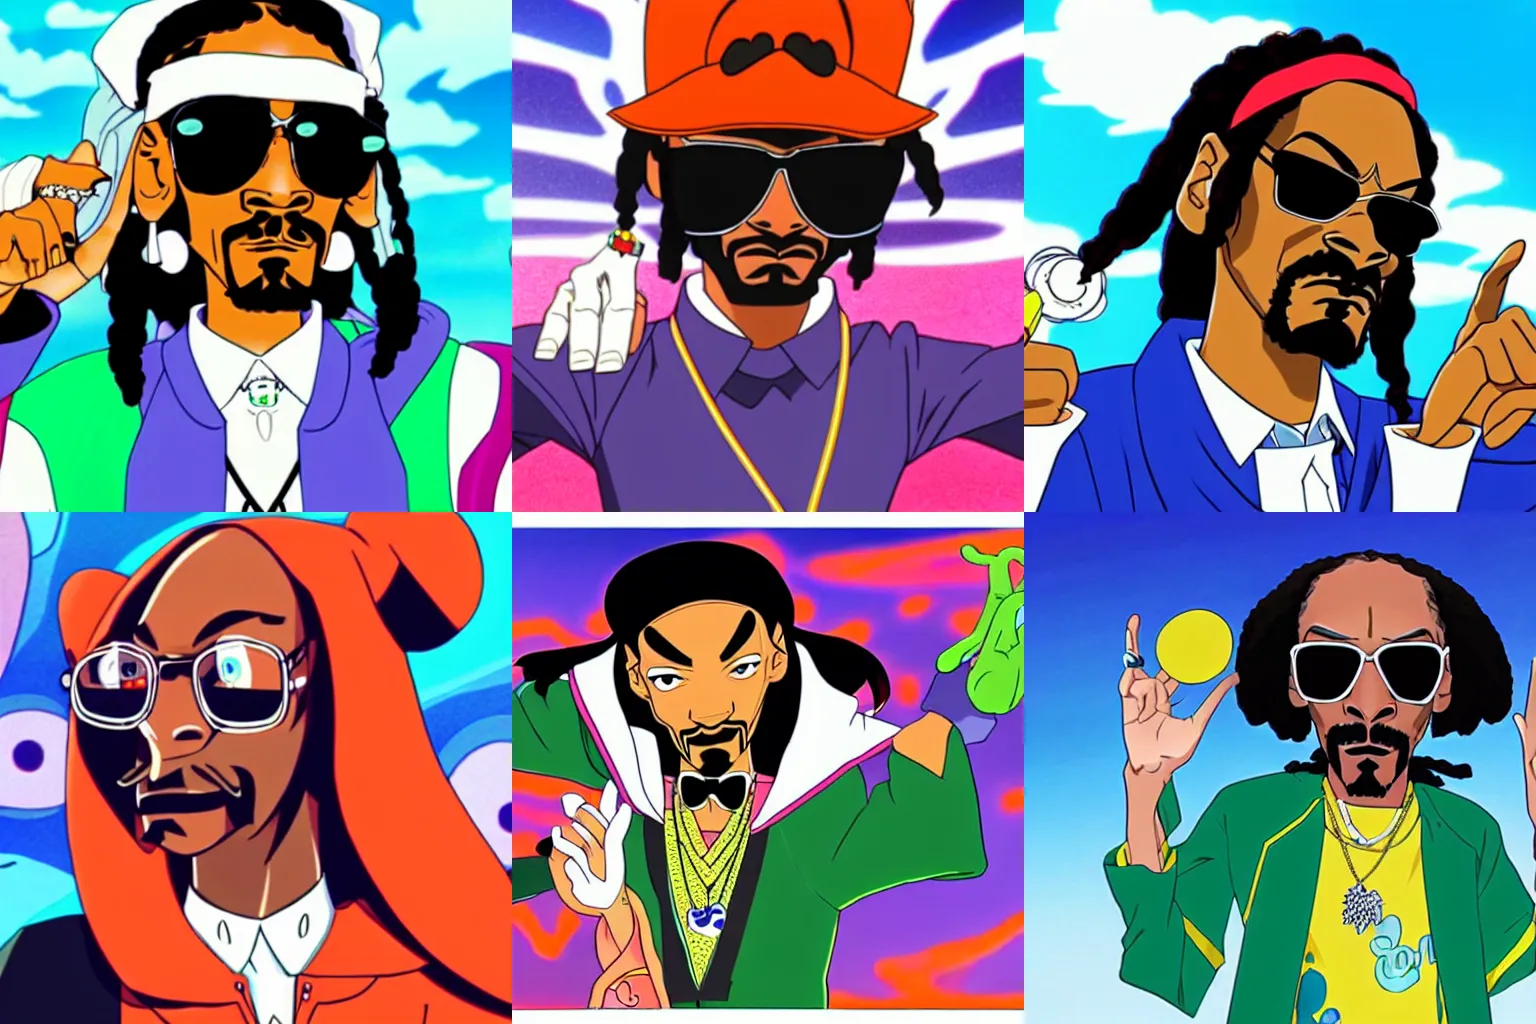 Prompt: Snoop Dogg anime style, by Hiroyuki Imaishi, studio trigger, studio gainax